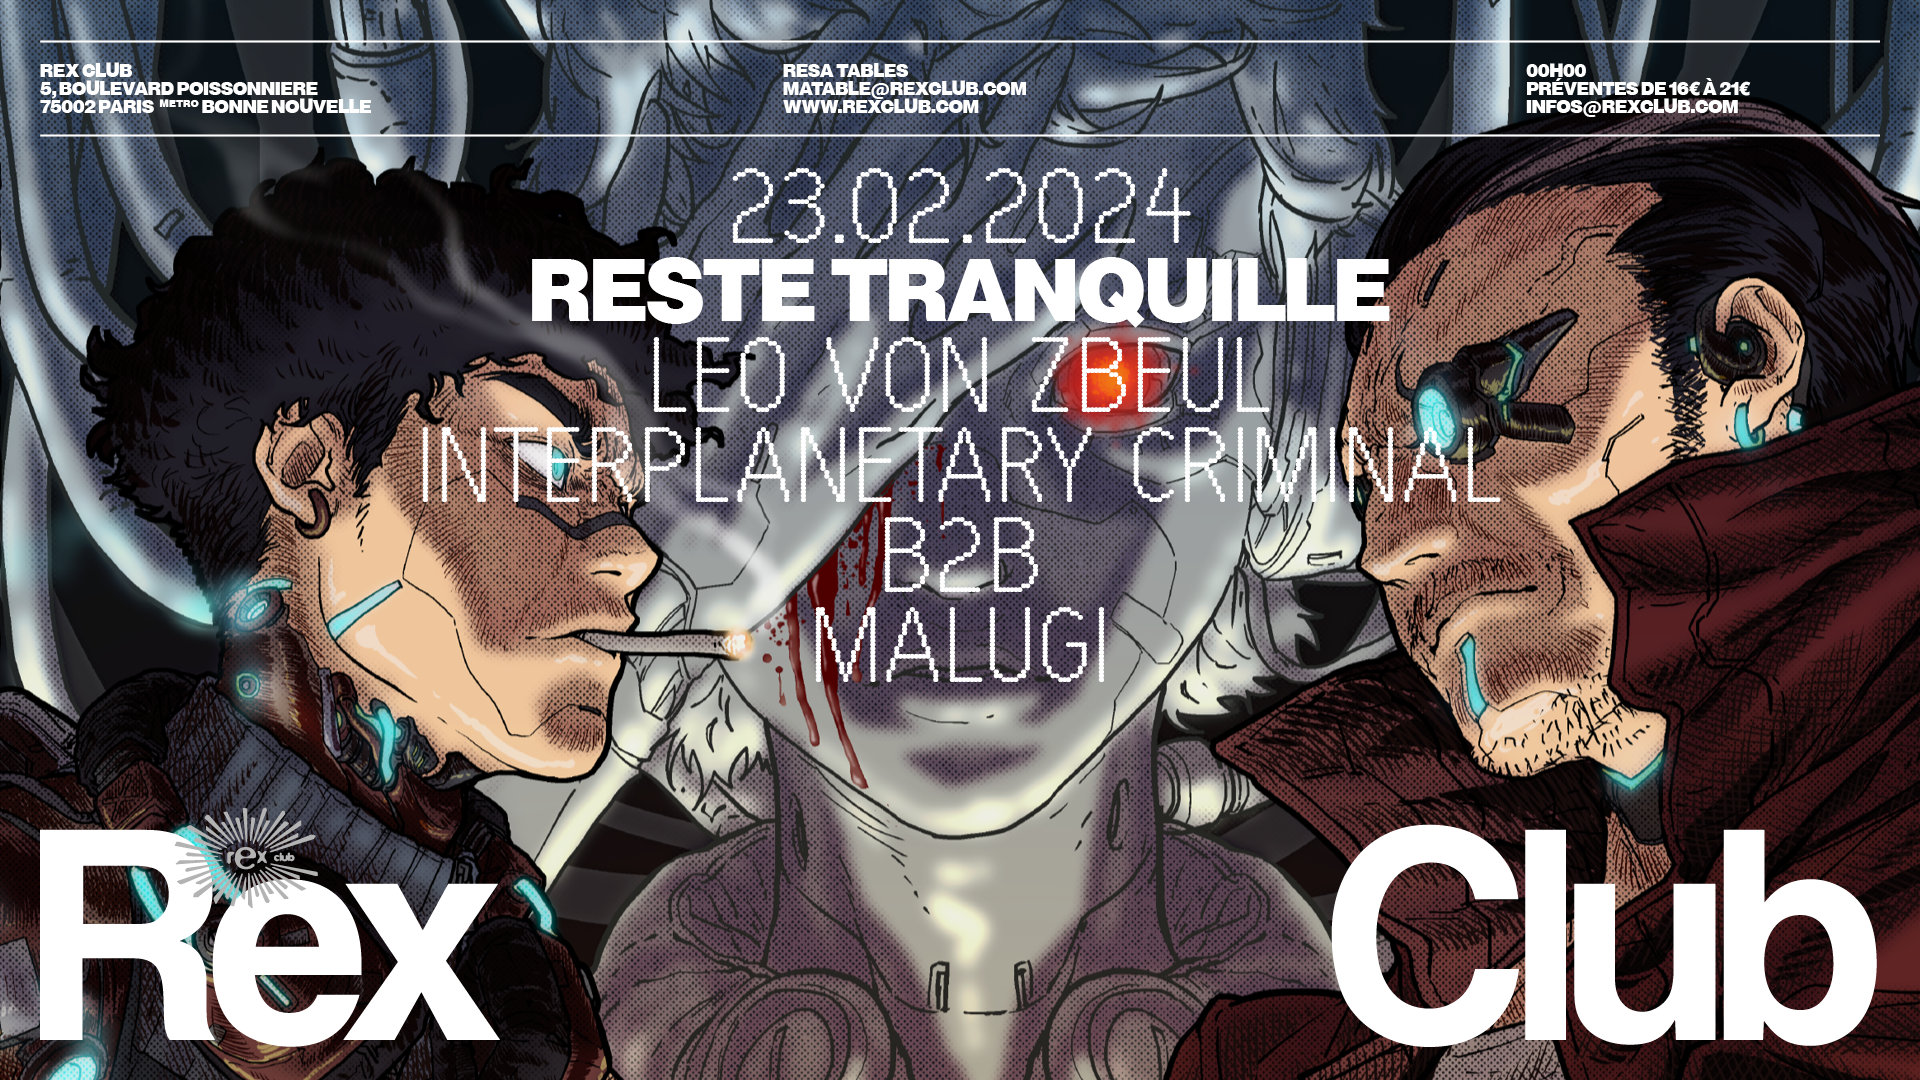 Reste Tranquille: Leo Von Zbeul, Interplanetary Criminal b2b MALUGI - Página frontal